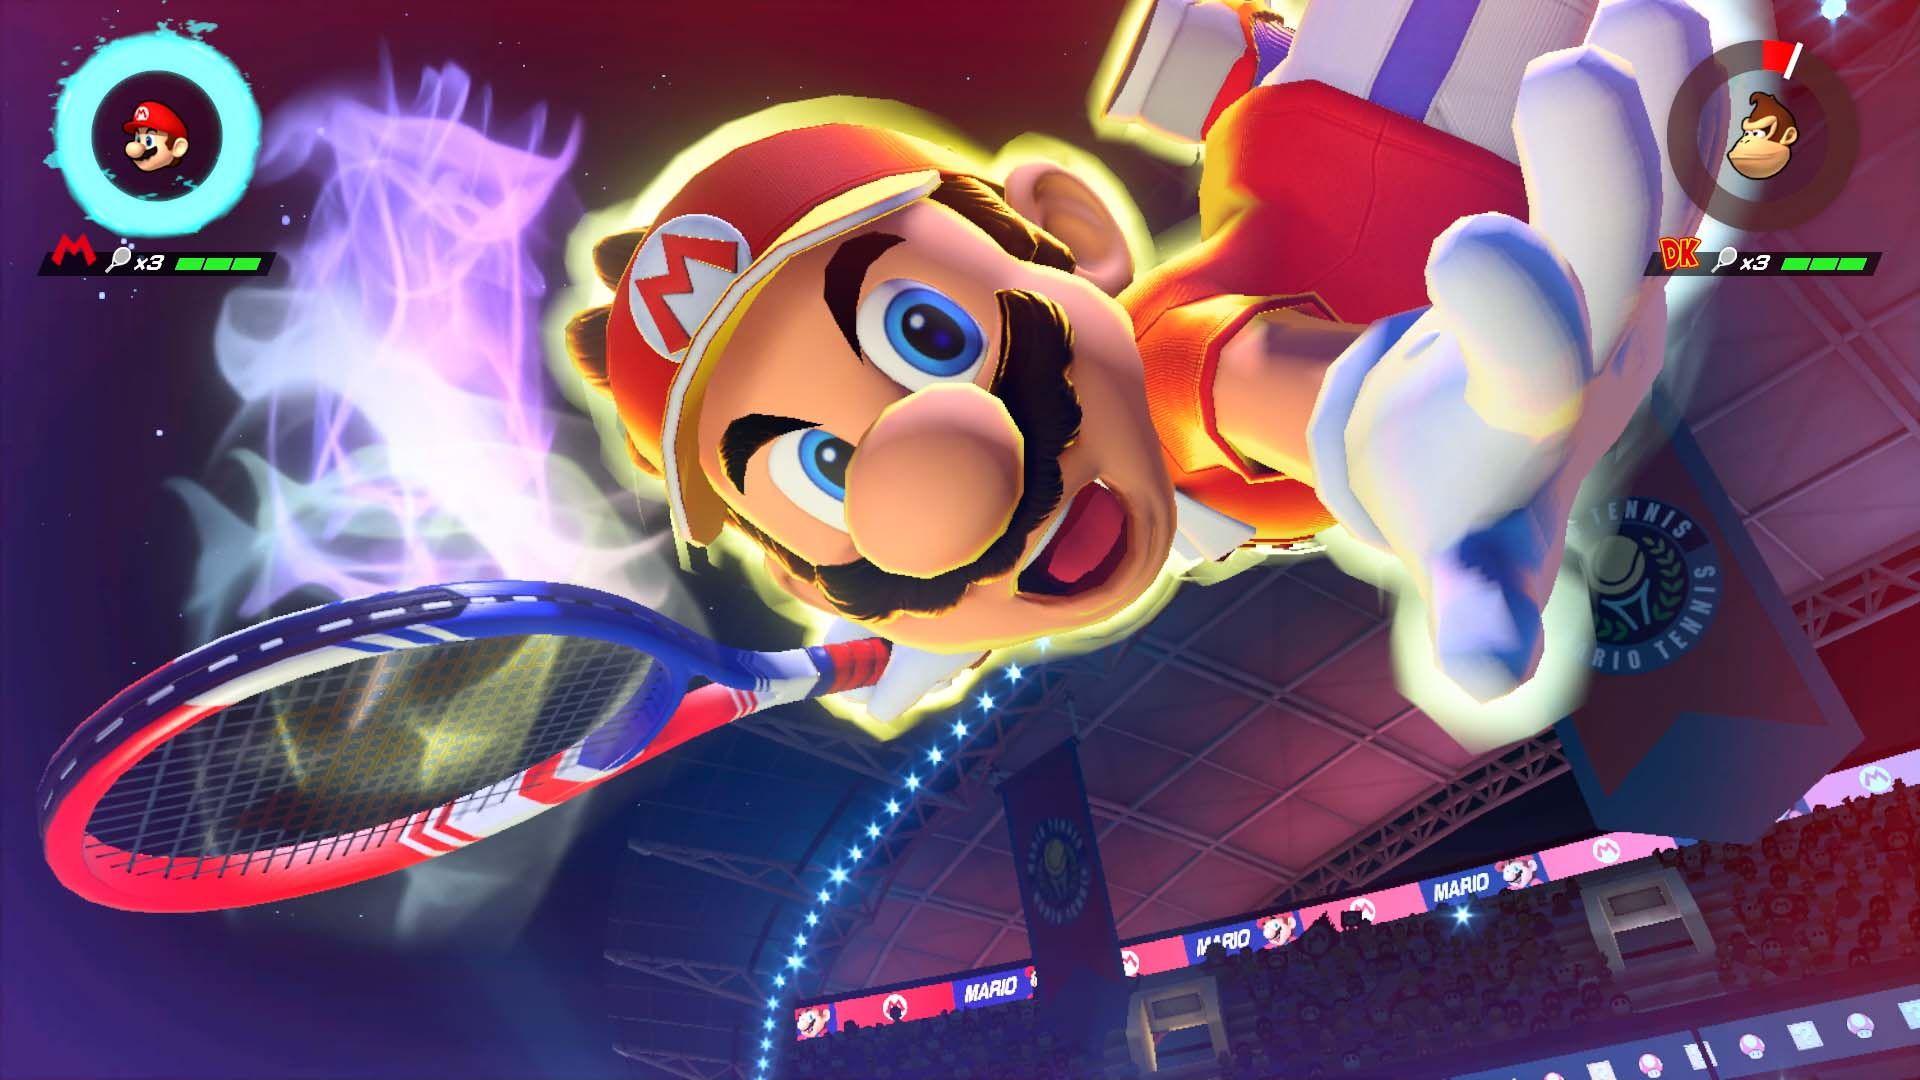 Nintendo's 'Mario Tennis Aces' combines charm with surprising depth